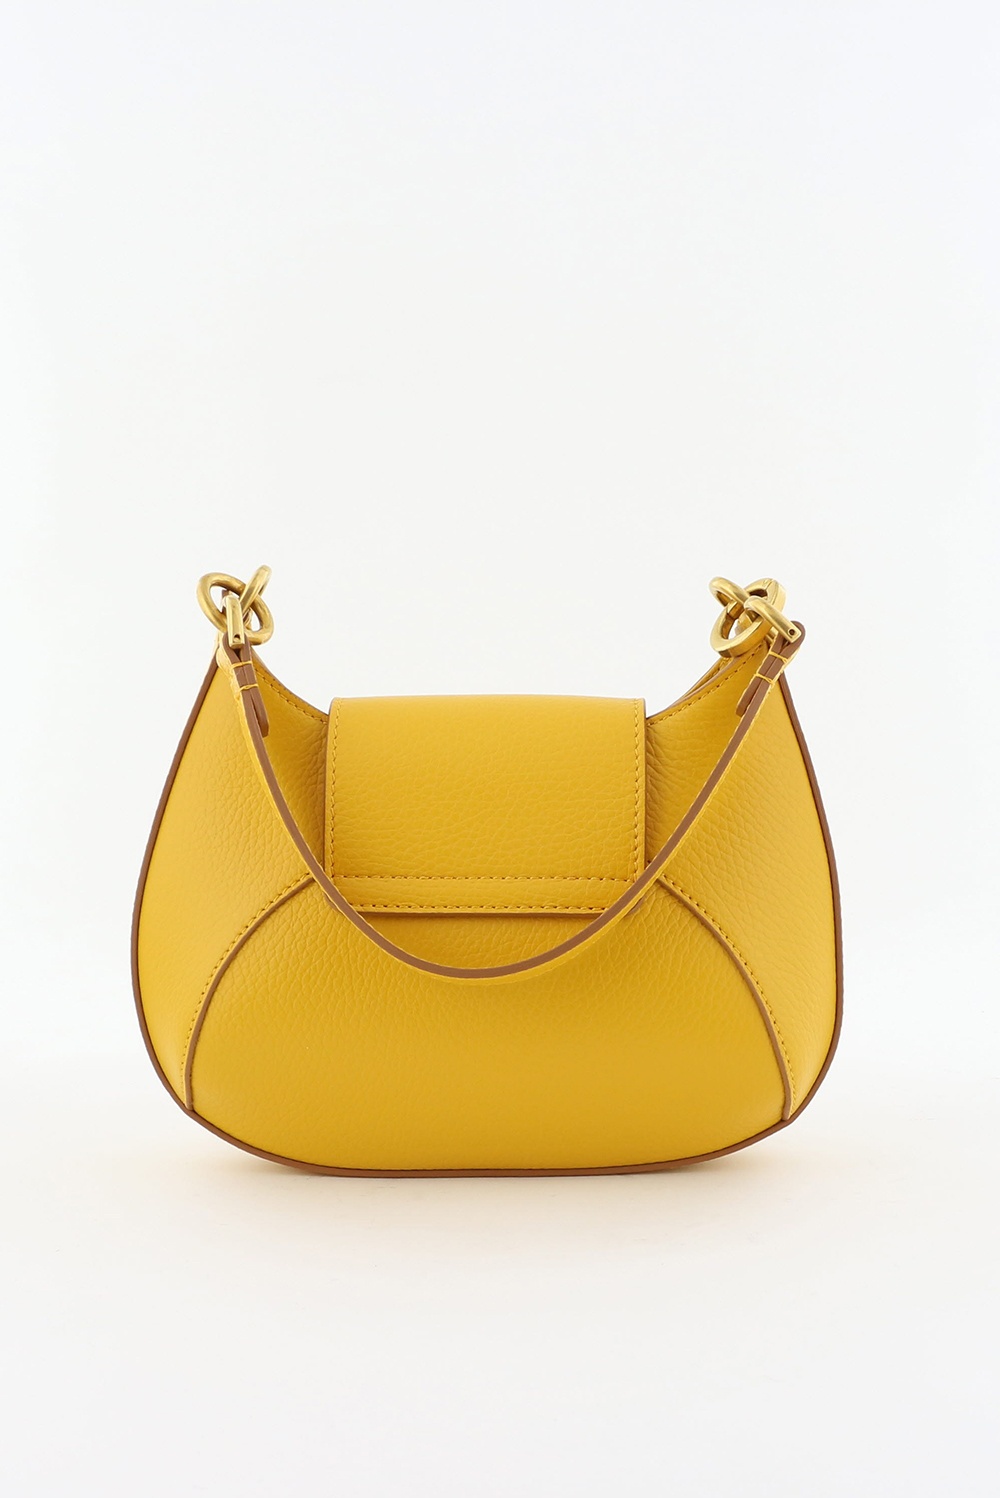 Talbots Yellow Leather Purse Crossbody Adjustable Shoulder Bag | eBay